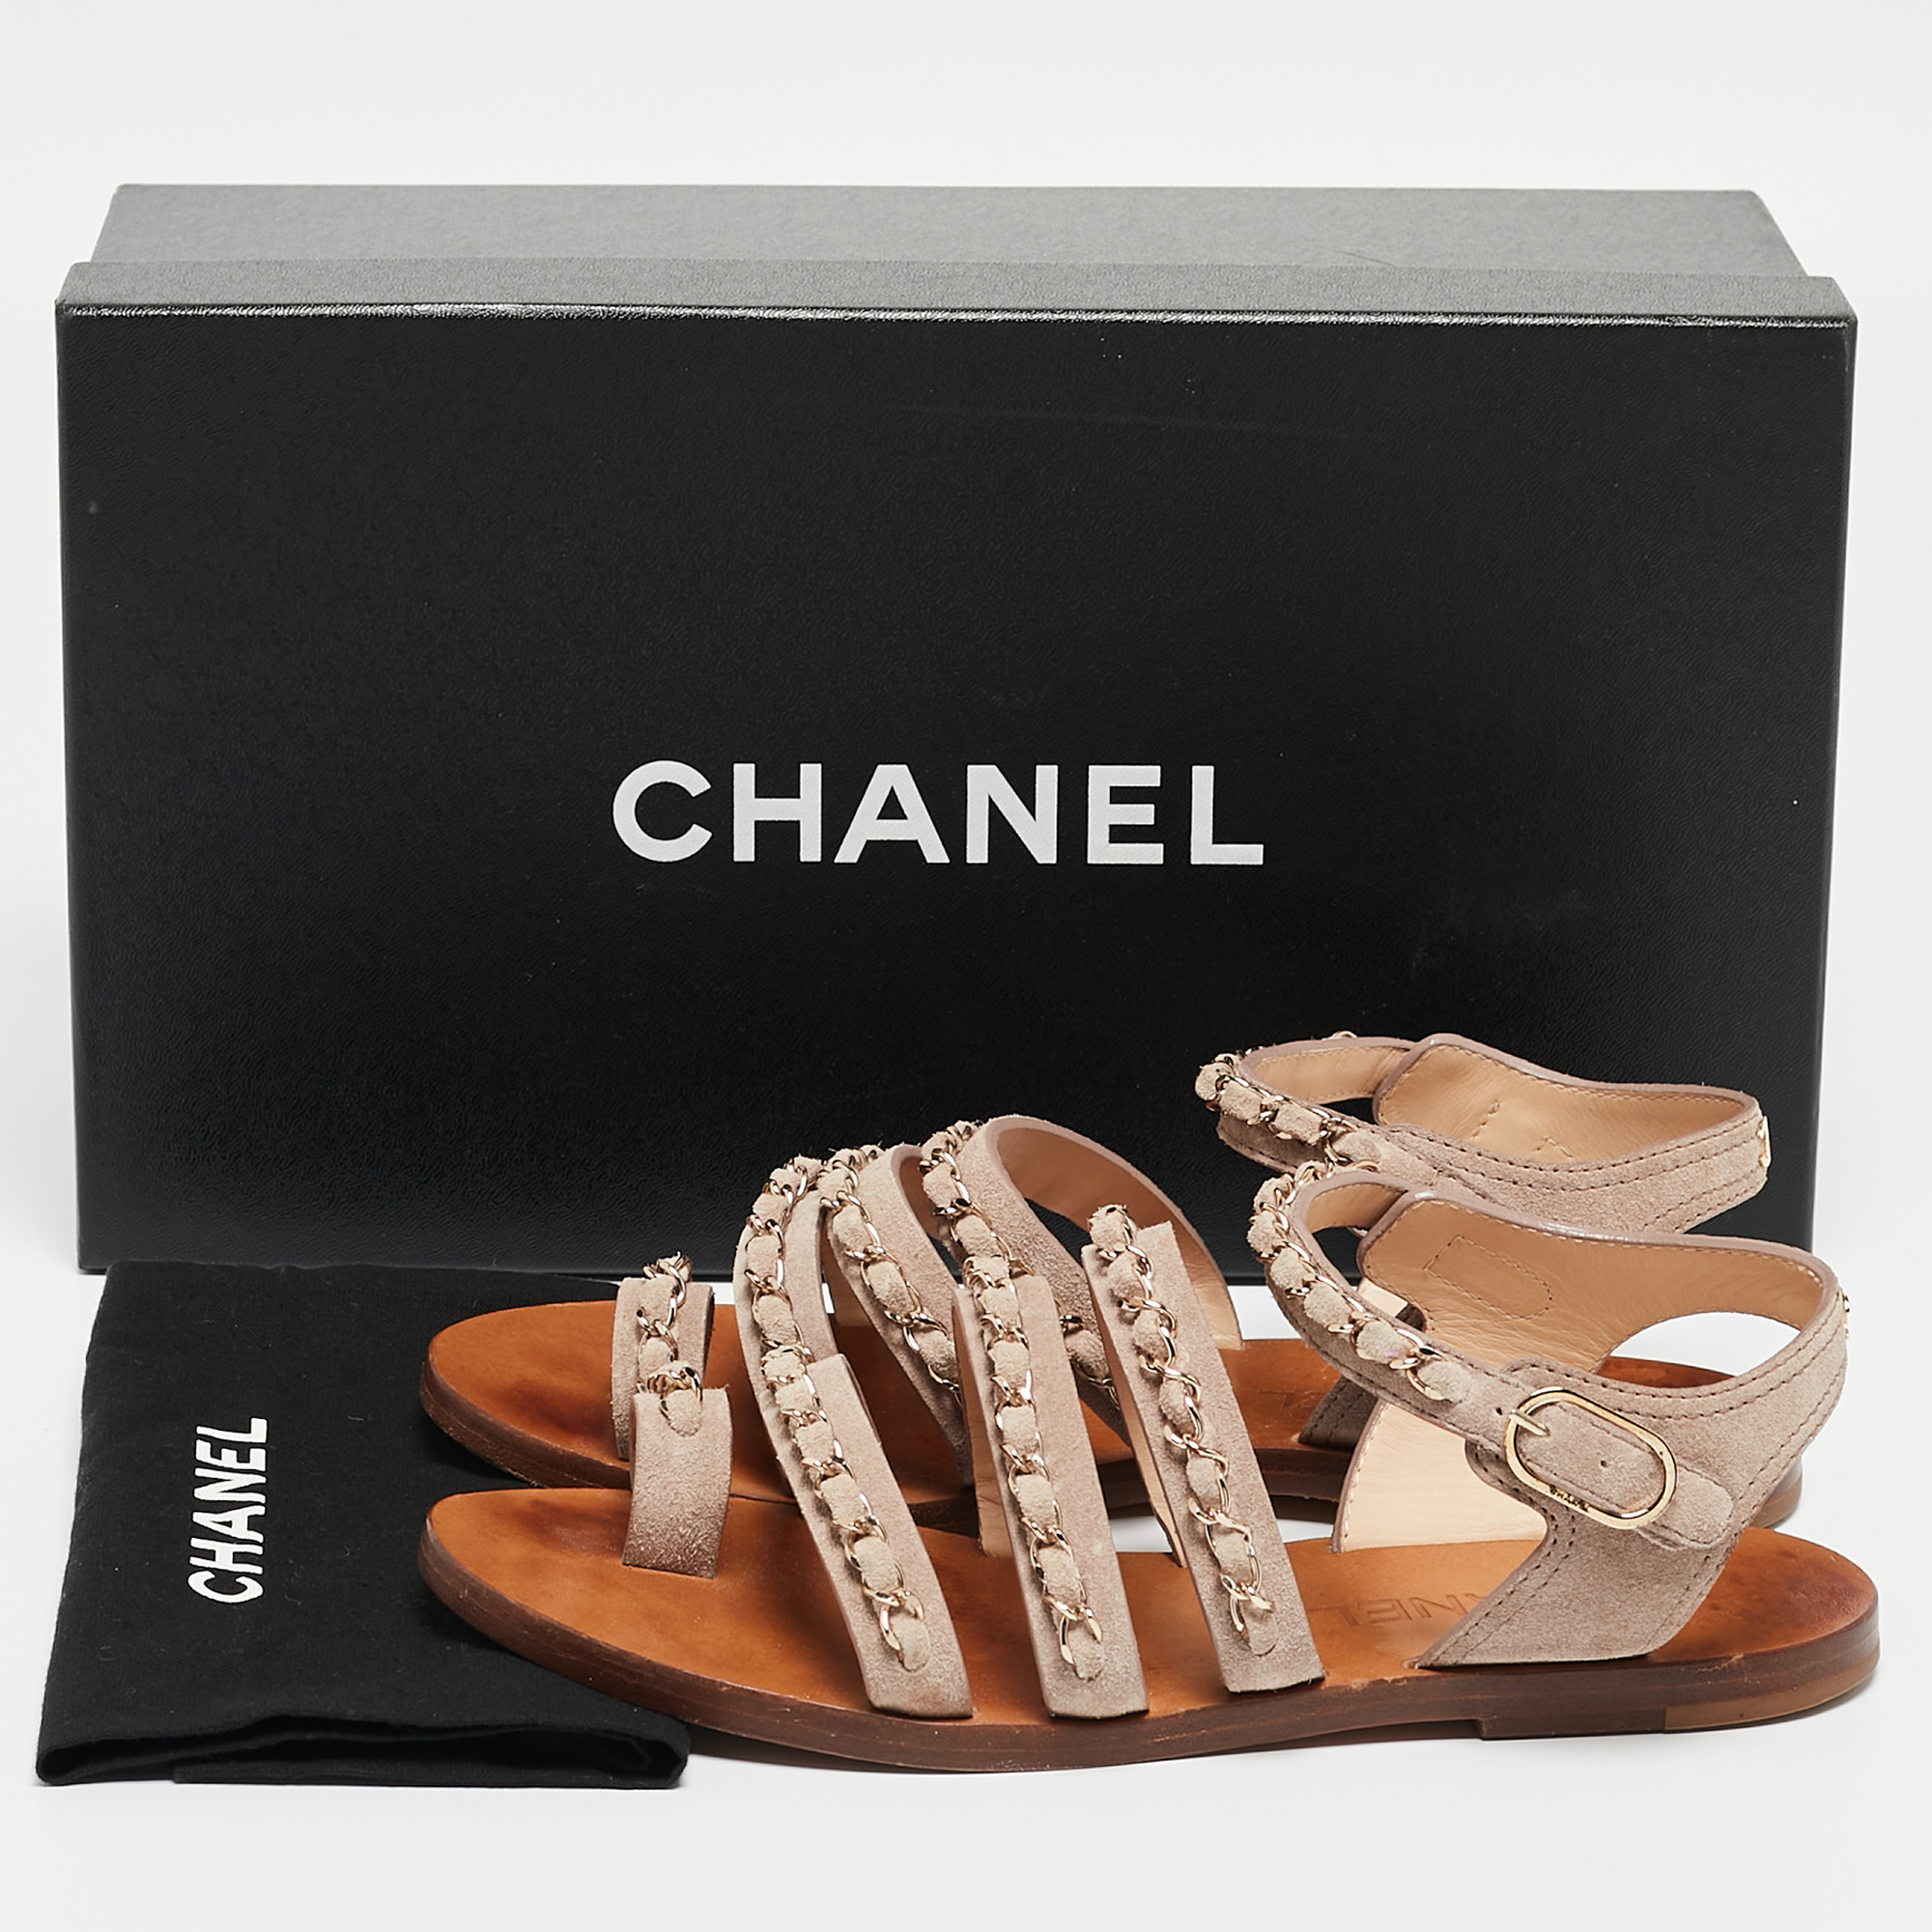 Chanel Beige Suede Chain Detail Flat Sandals Size 37